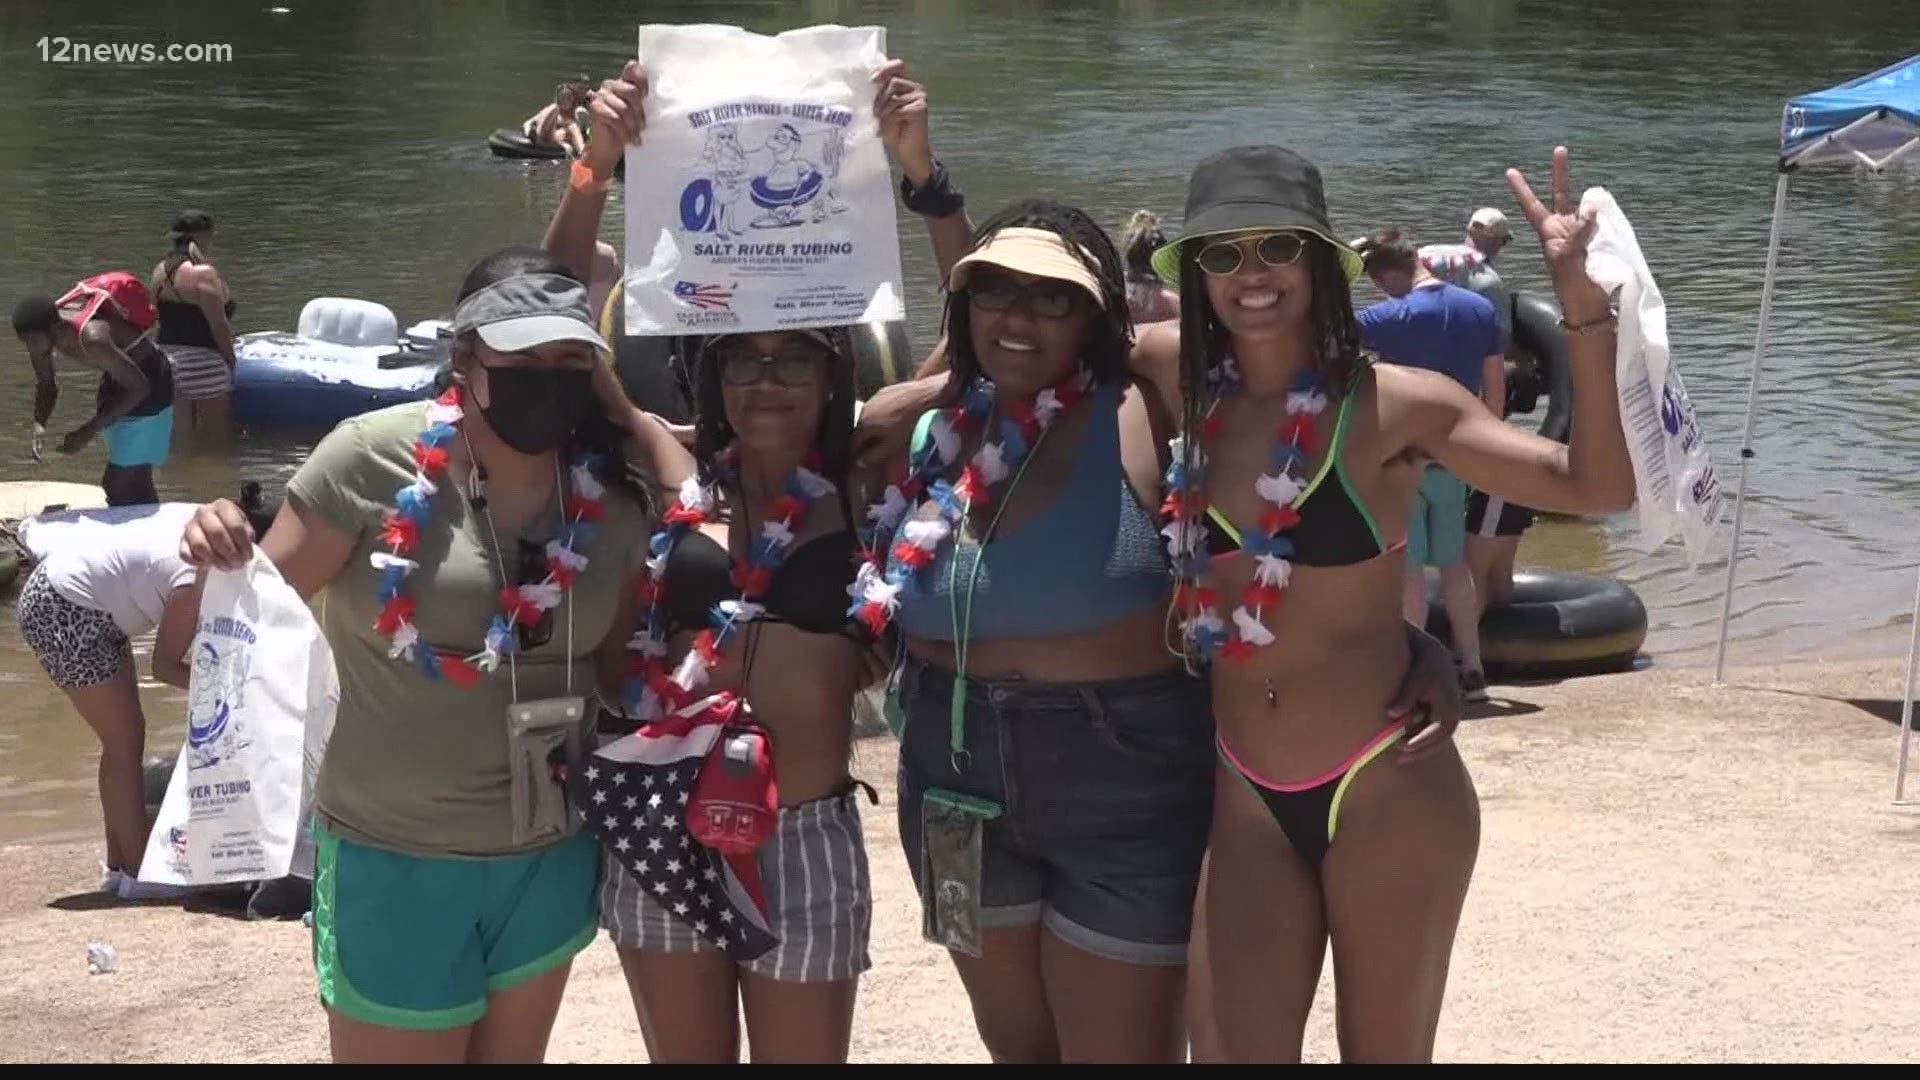 Arizonans celebrate Memorial Day by tubing on the Salt River